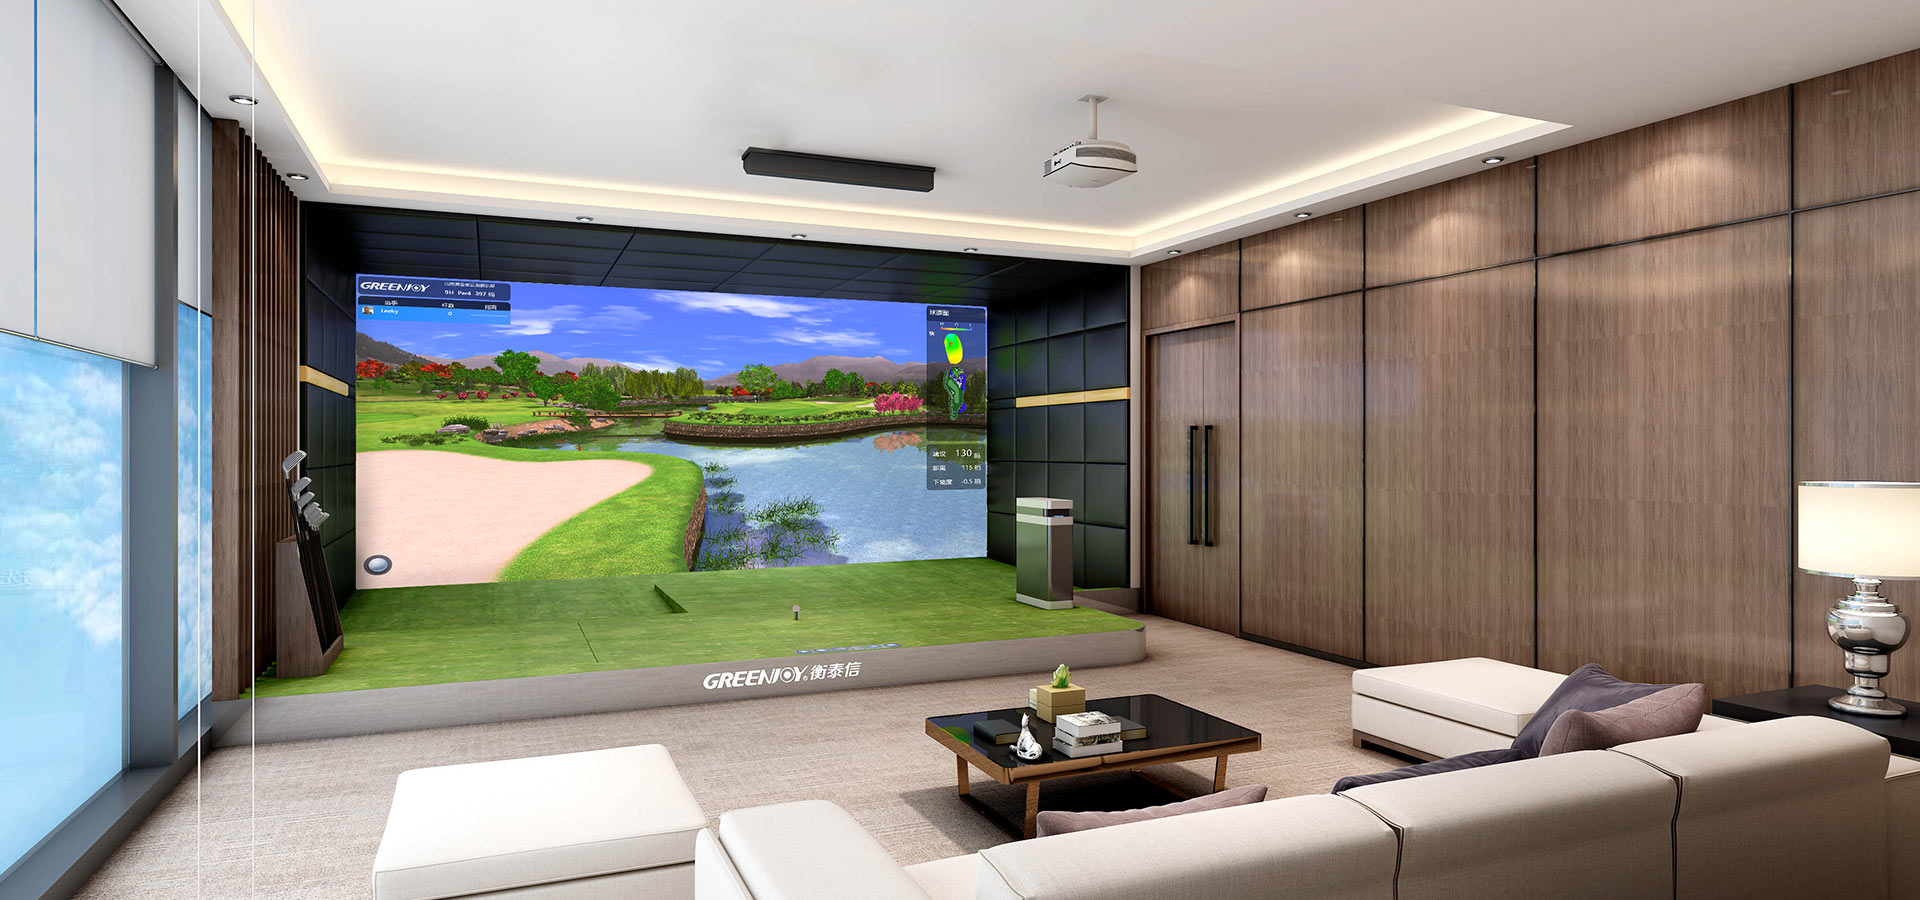 Hone Your Skills with Home Golf Simulators